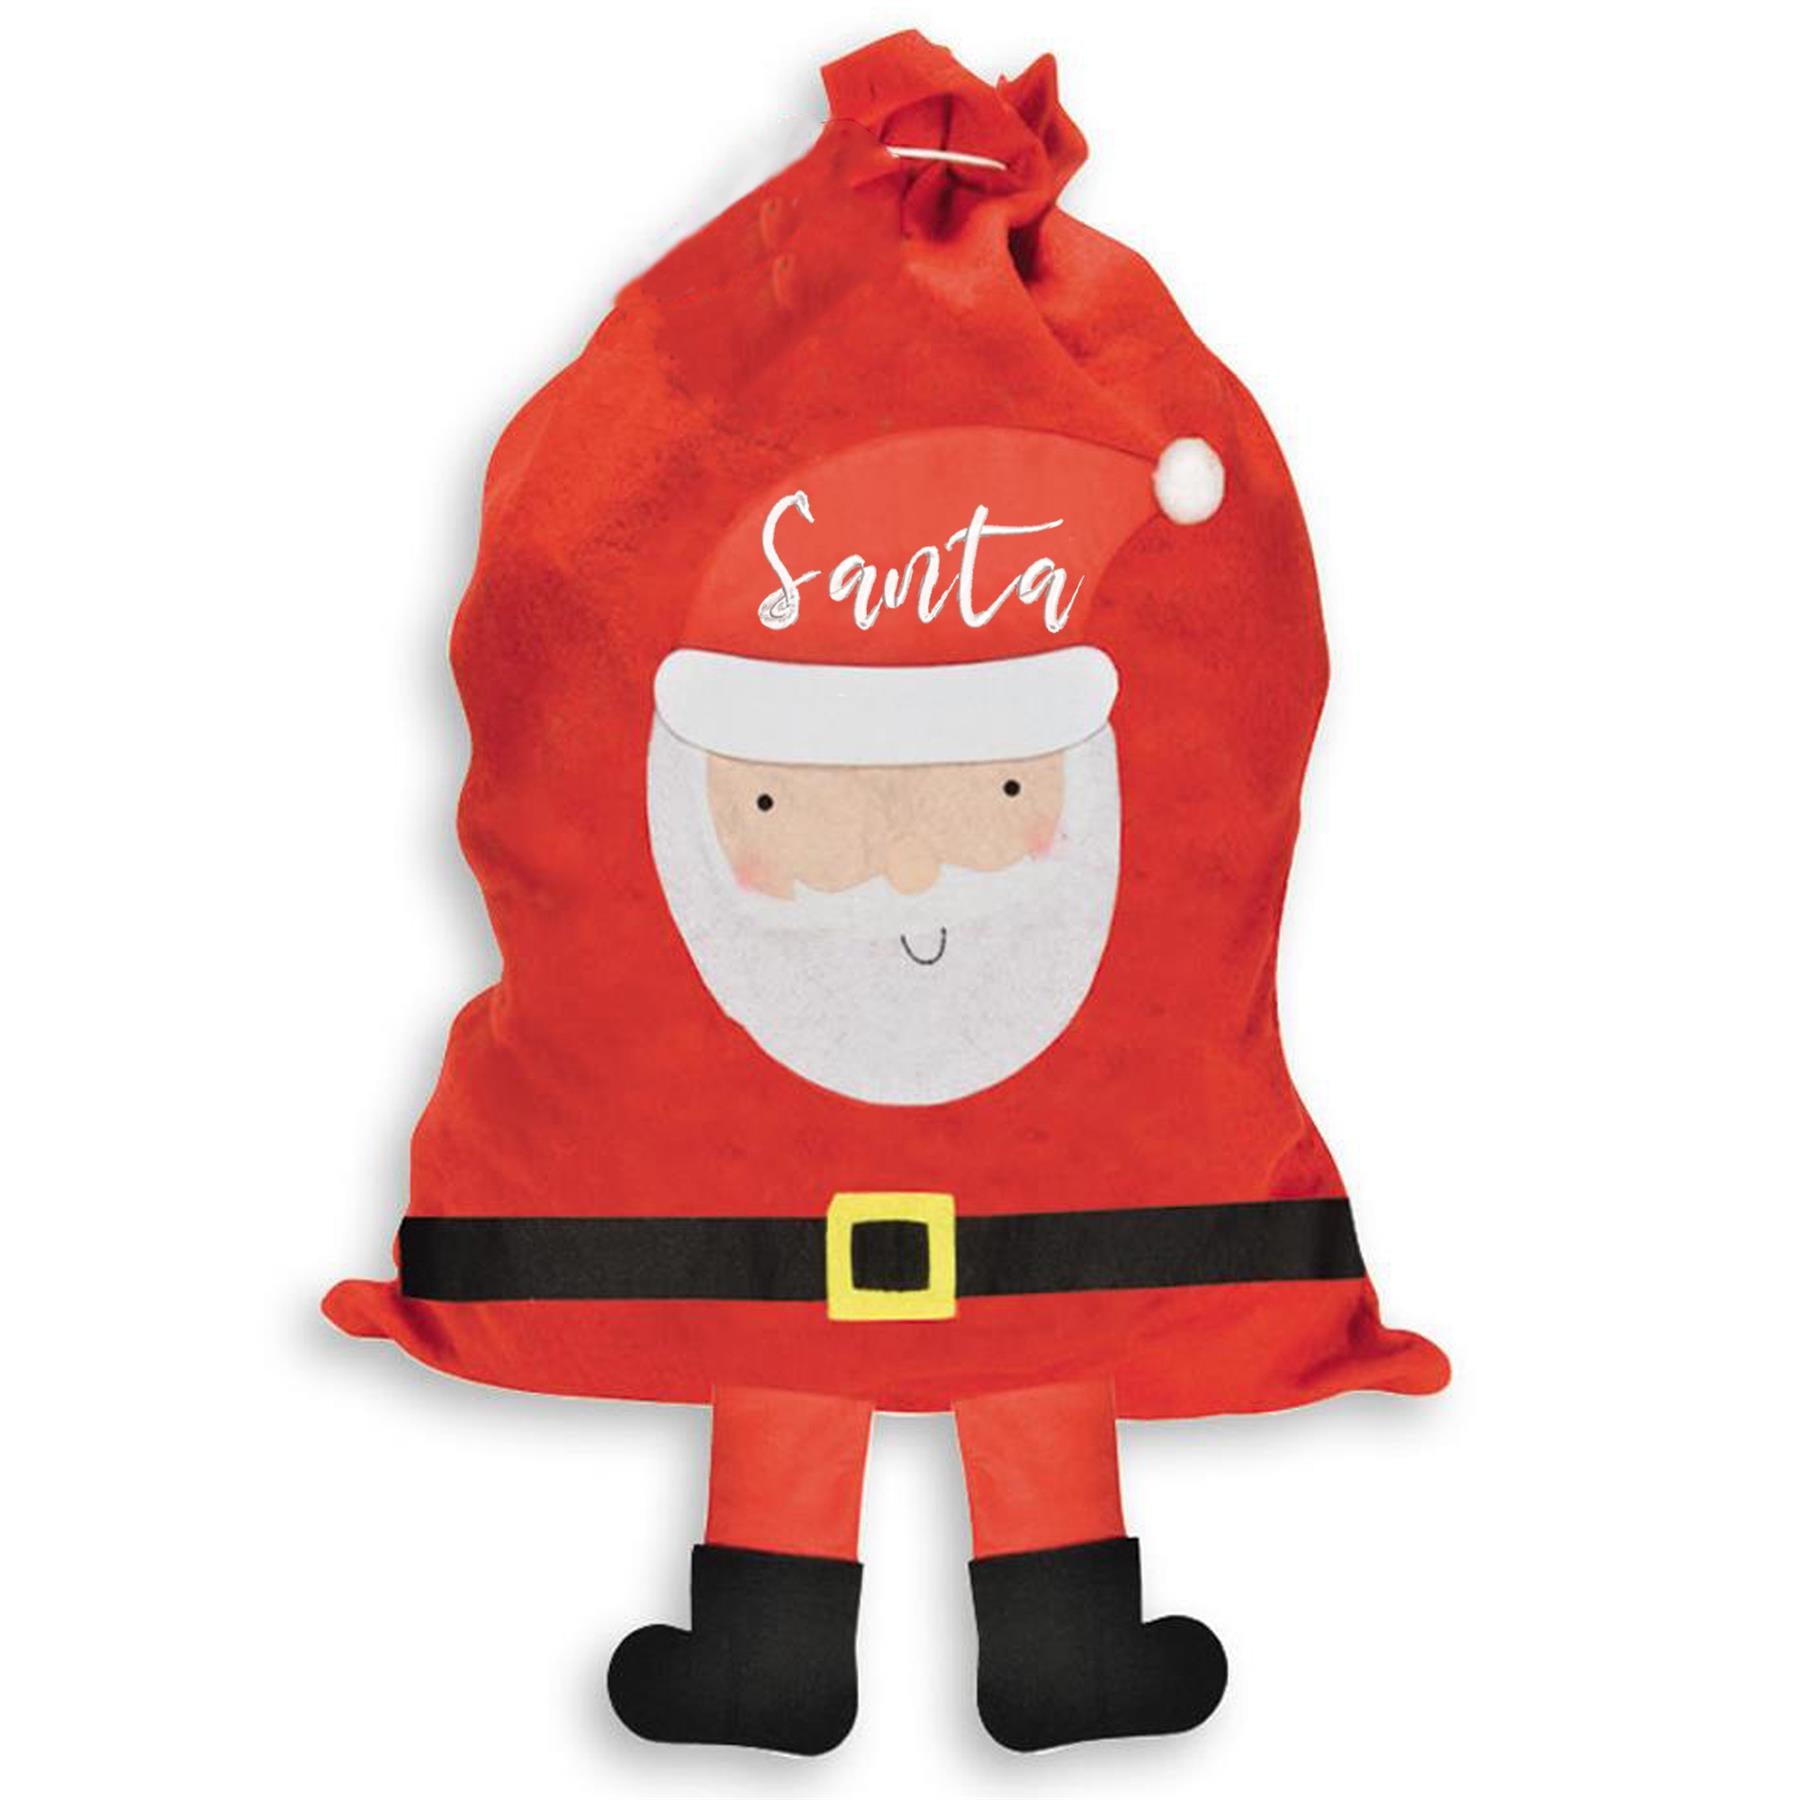 Personalised Embroidered Christmas Jumbo Stocking Sack With Legs Santa Or Elf Design  - Always Looking Good - Santa  